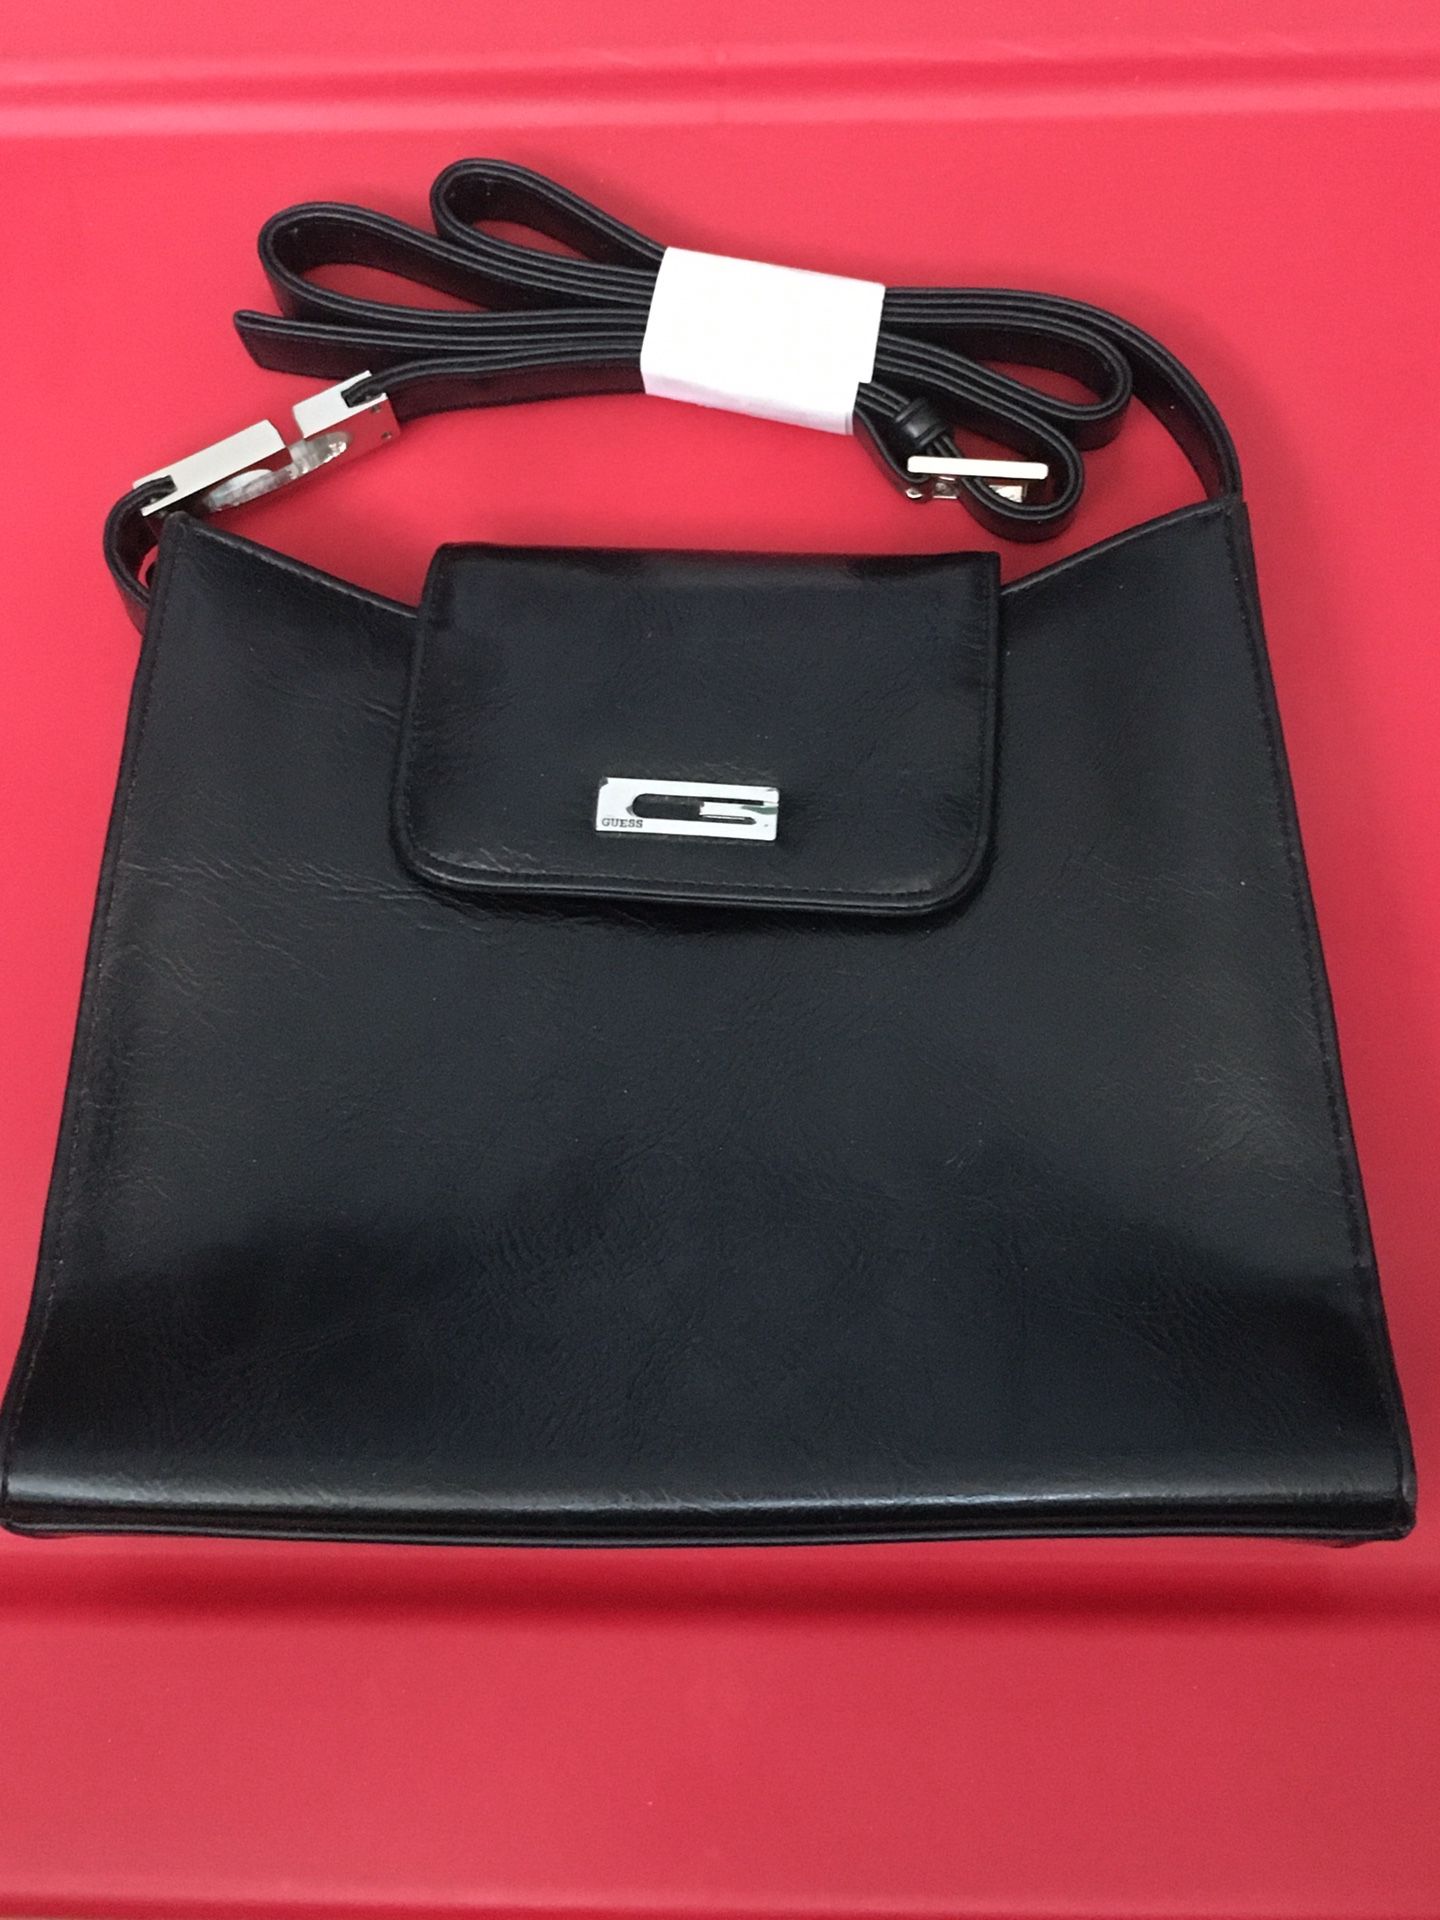 GUESS Authentic Handbag/Purse